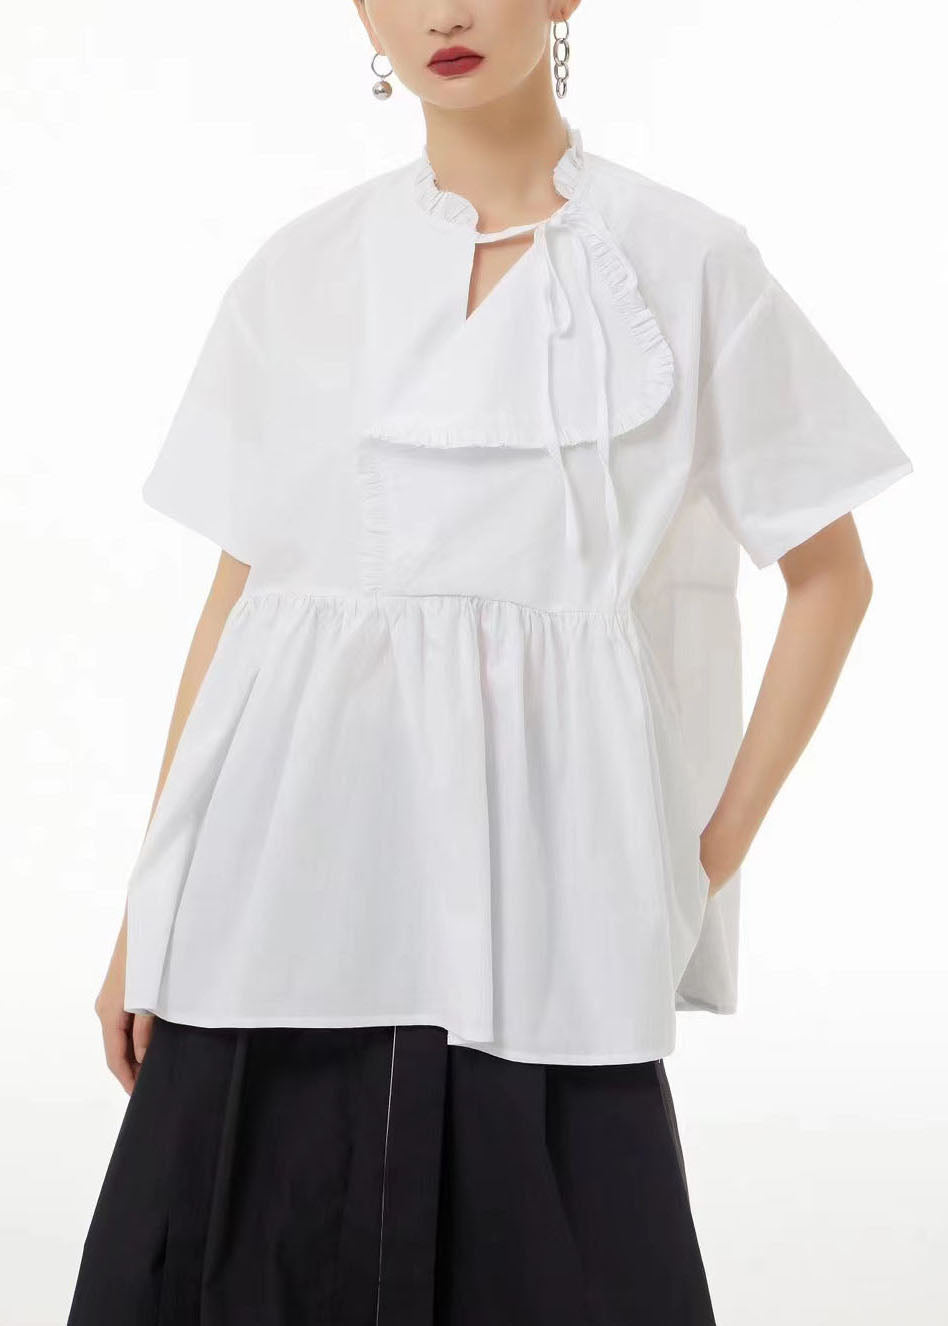 Art Black Asymmetrical Patchwork Wrinkled Cotton Shirt Tops Summer LC0112 - fabuloryshop